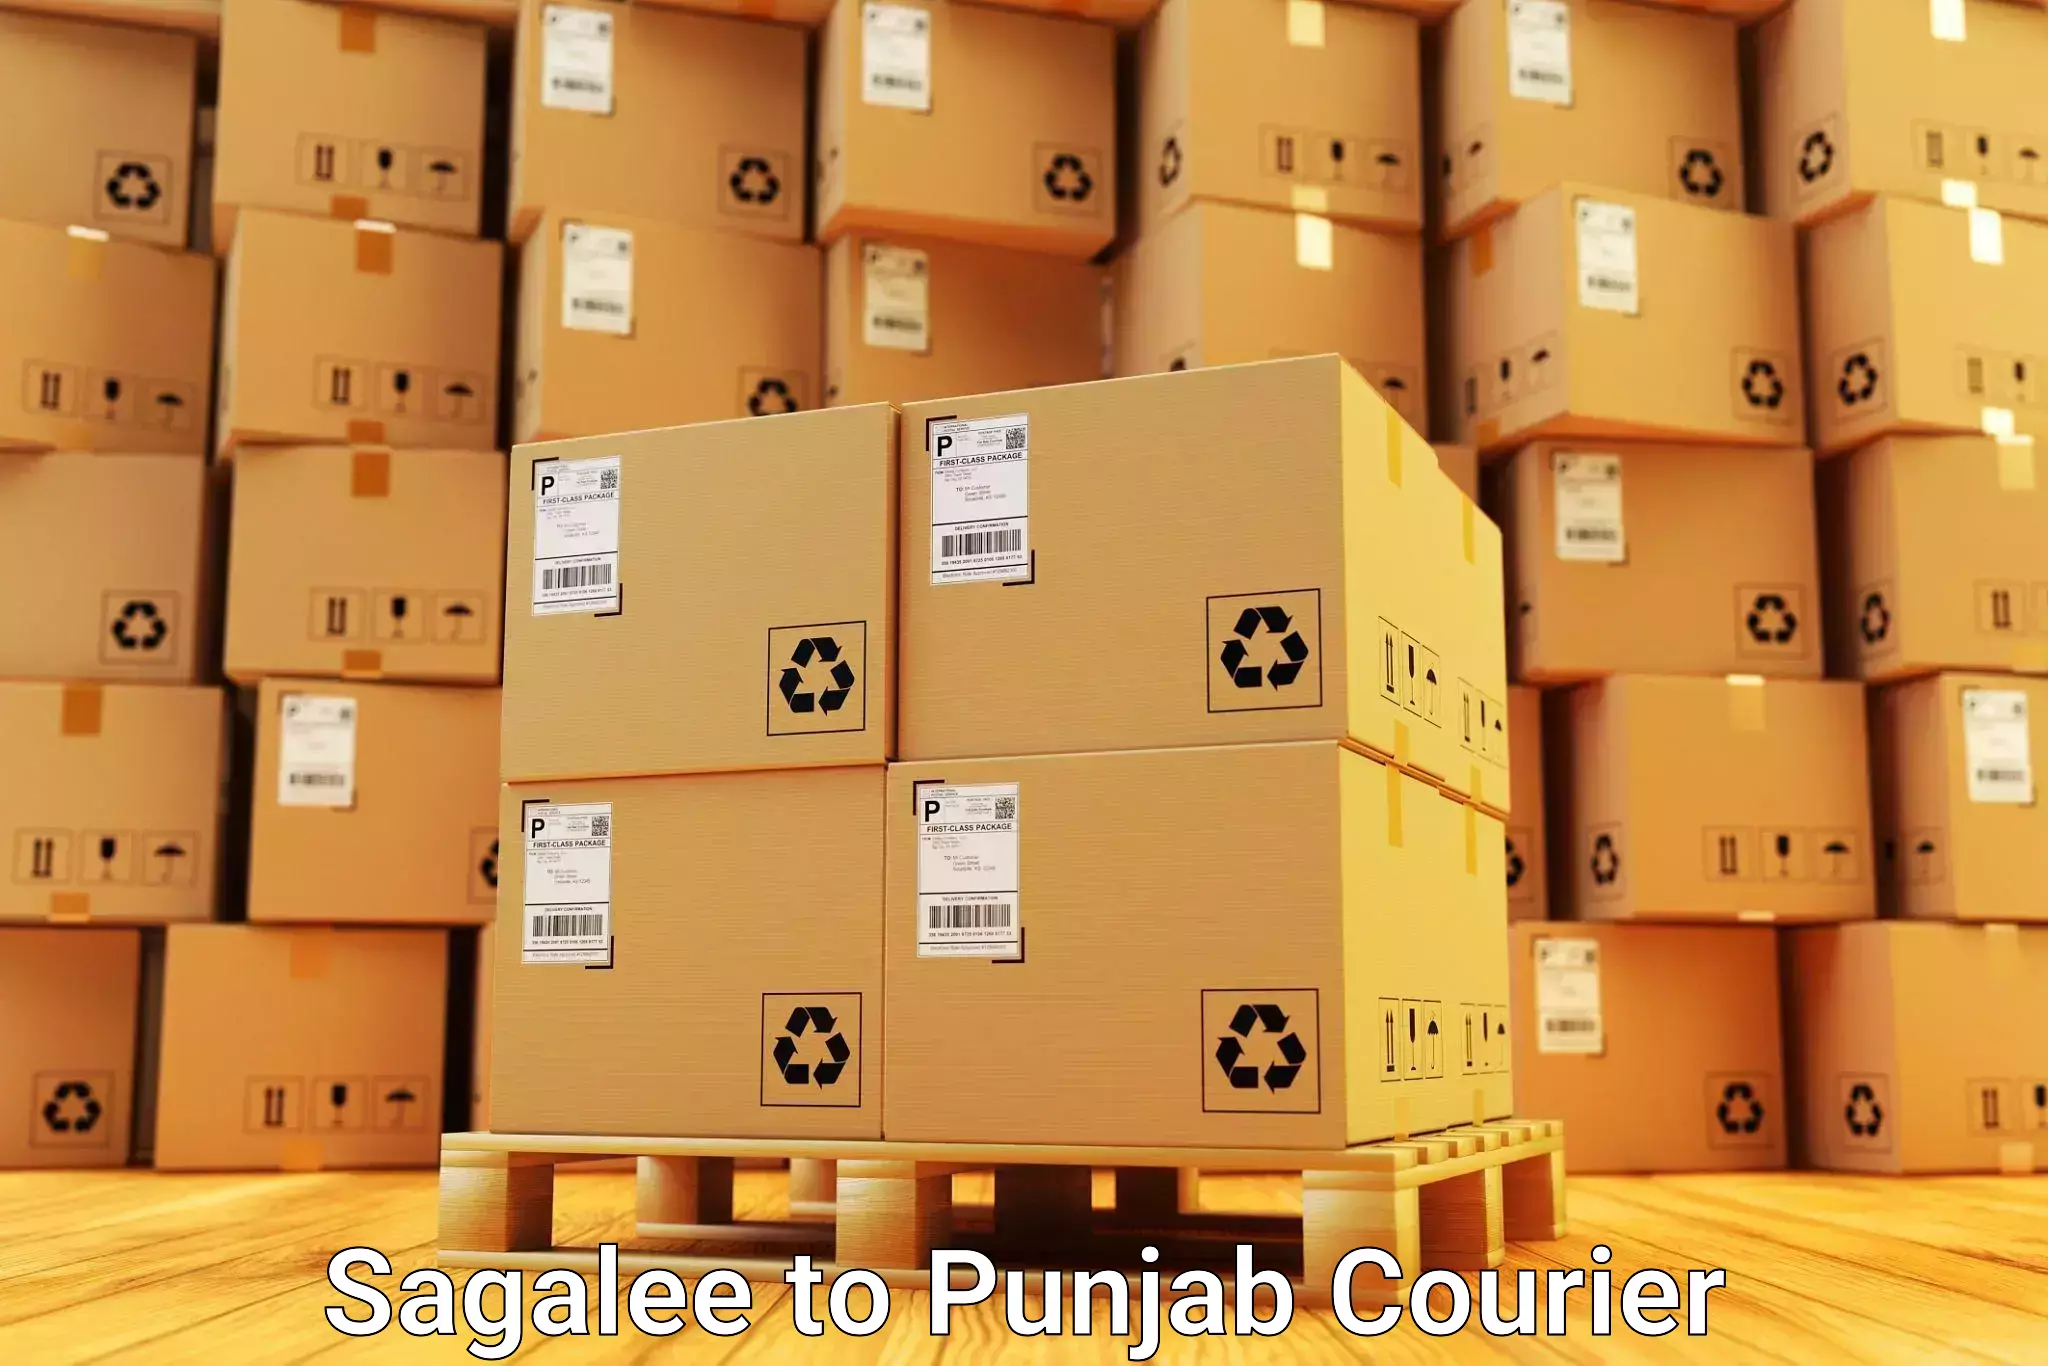 Furniture delivery service Sagalee to Punjab